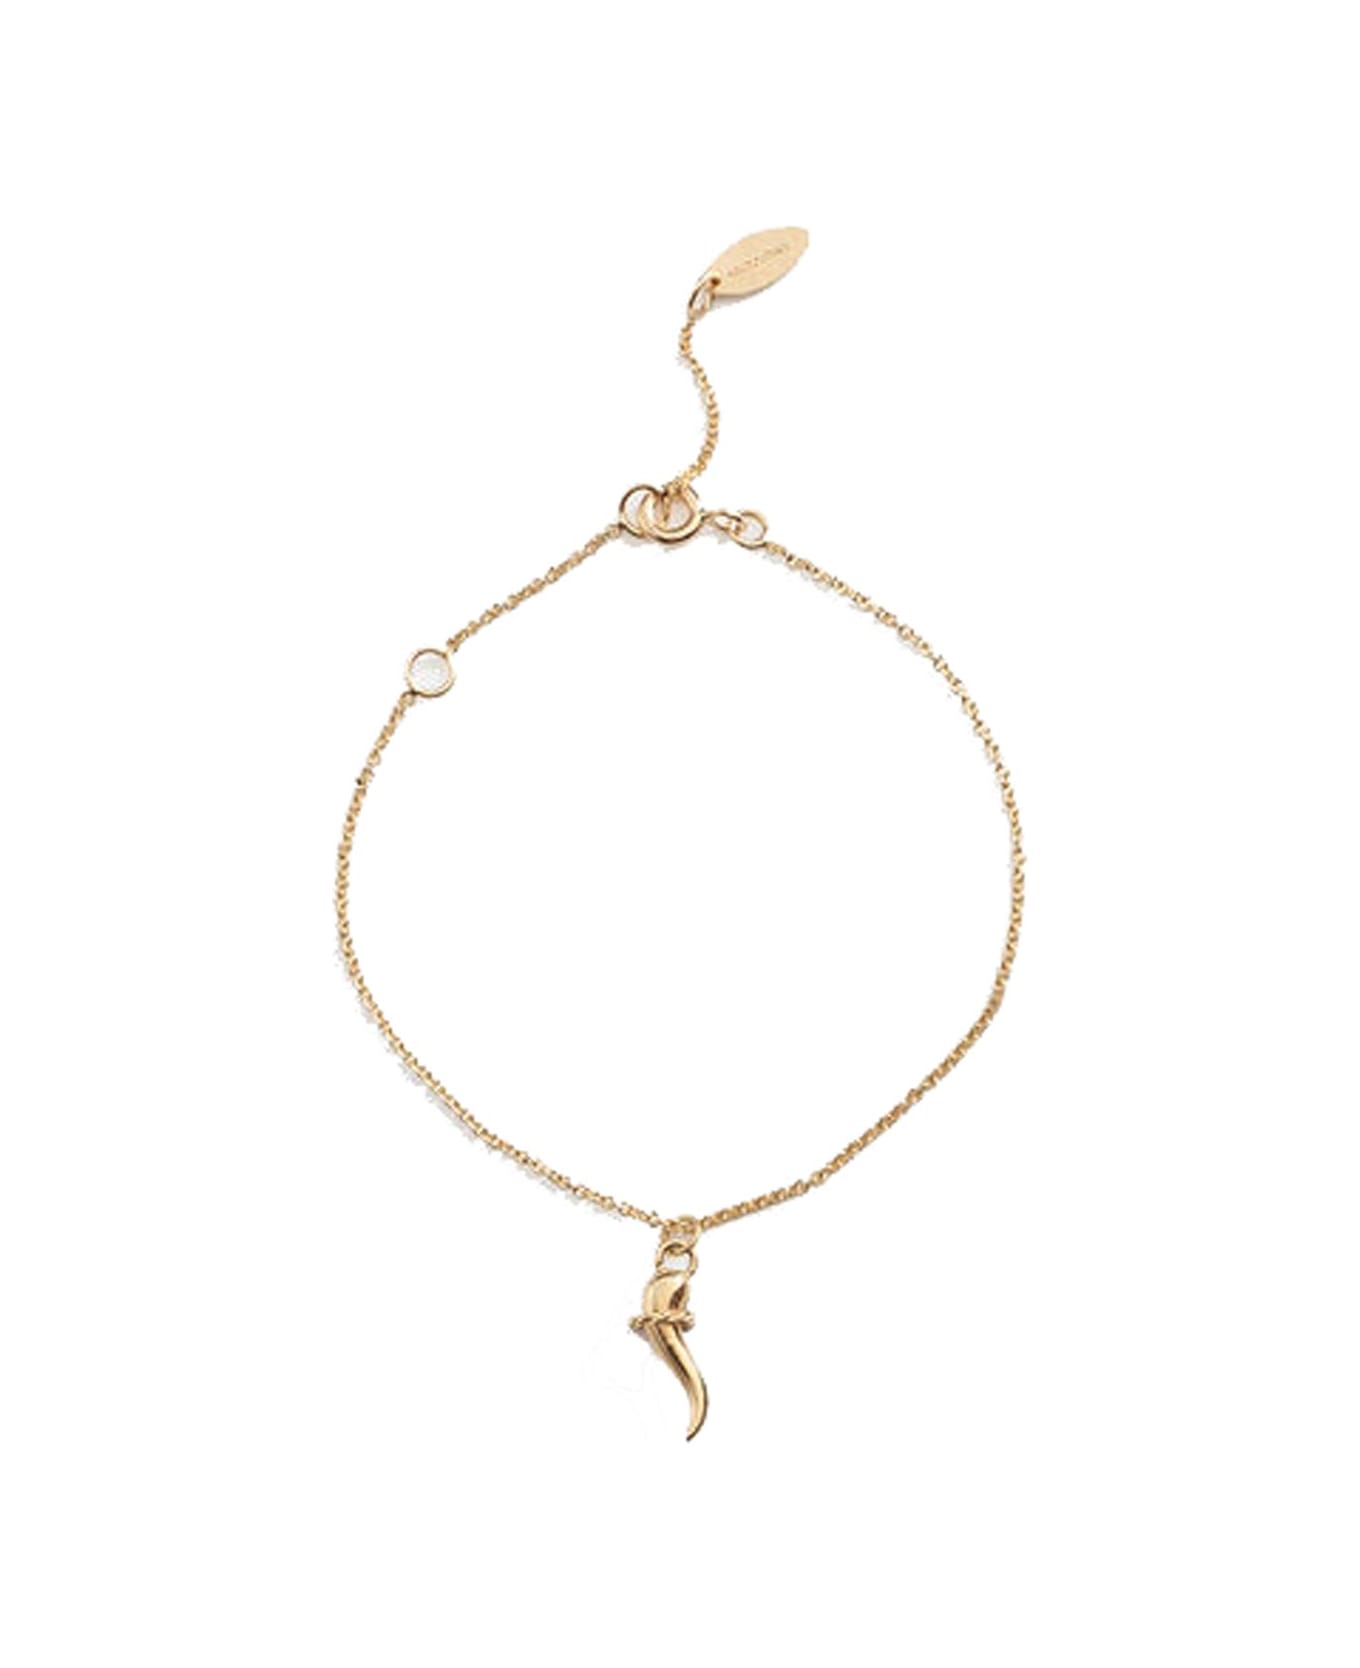 Dolce & Gabbana Bracelet With Good Luck Charm - Gold